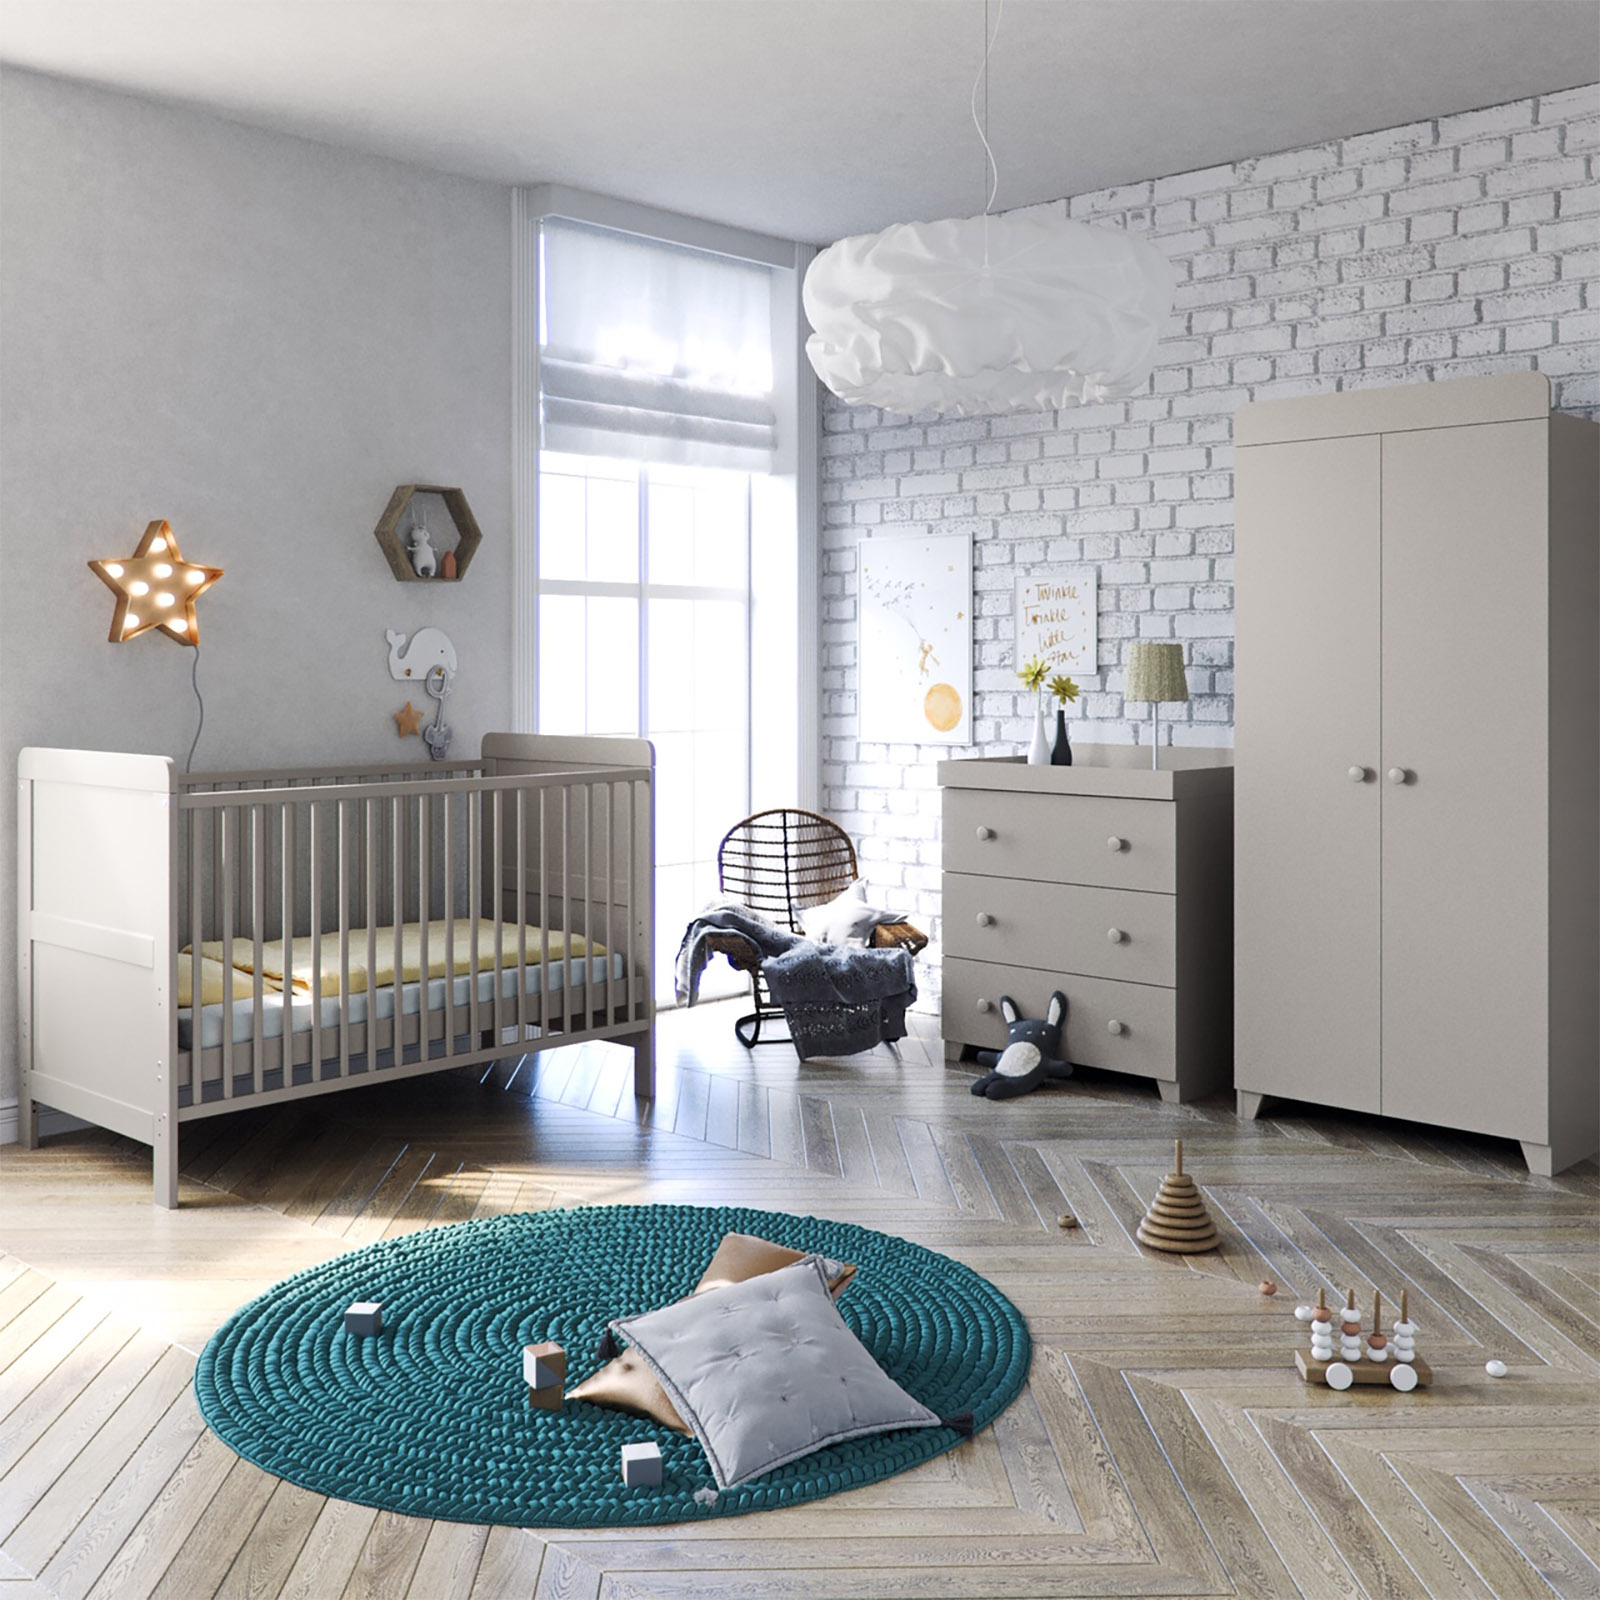 Little Acorns Classic Milano Cot Bed 5 Piece Nursery Furniture Set With Deluxe Fibre Mattress - Light Grey